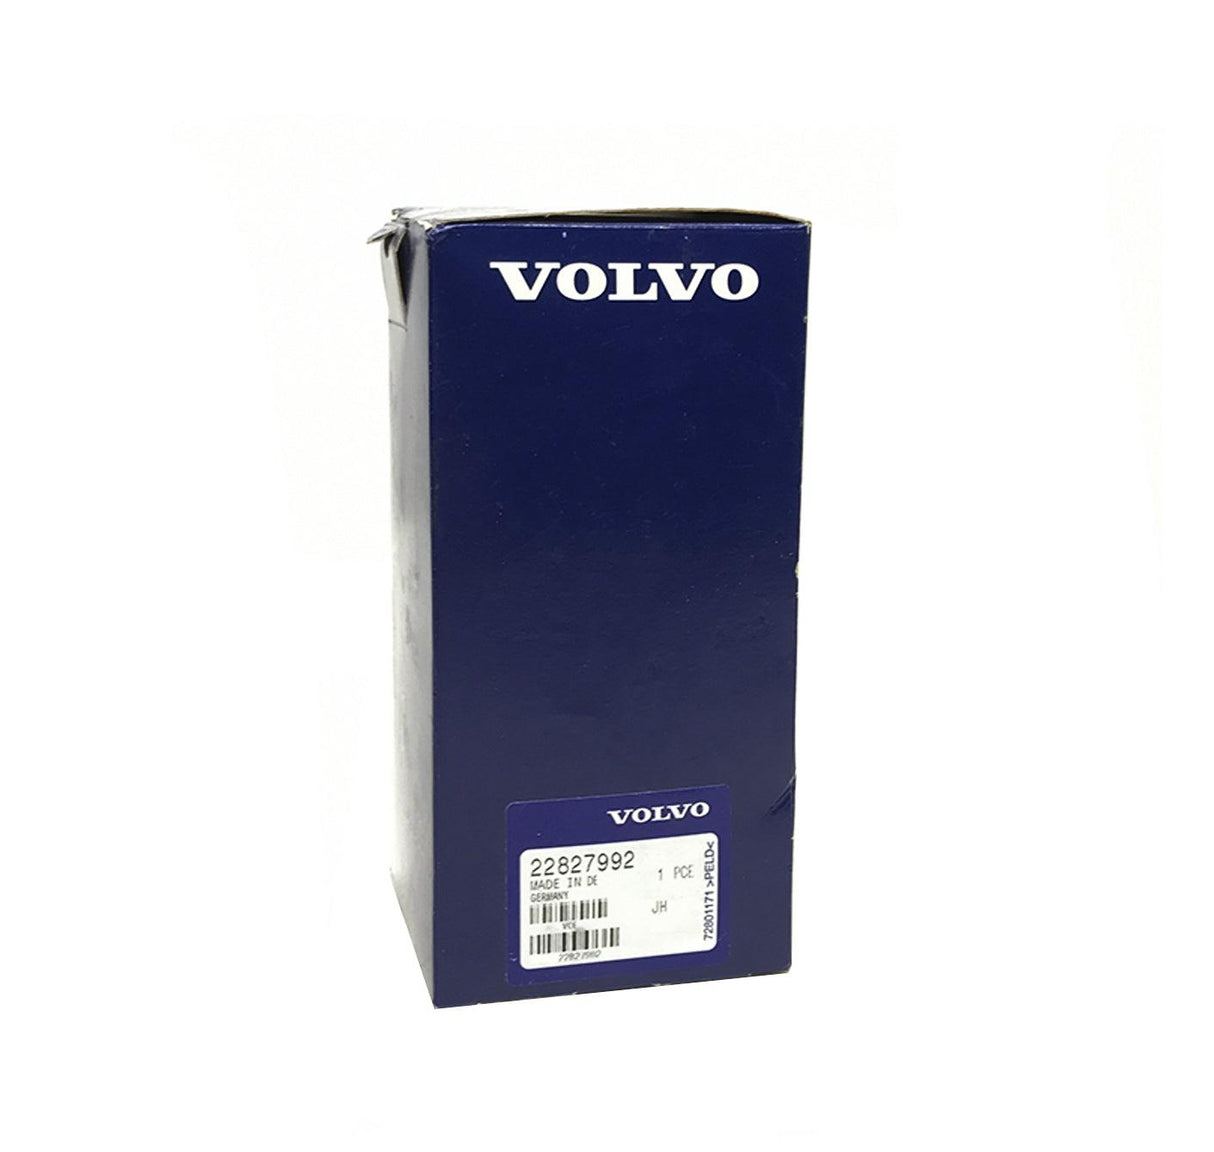 22827992 Genuine Volvo Nox Sensor.